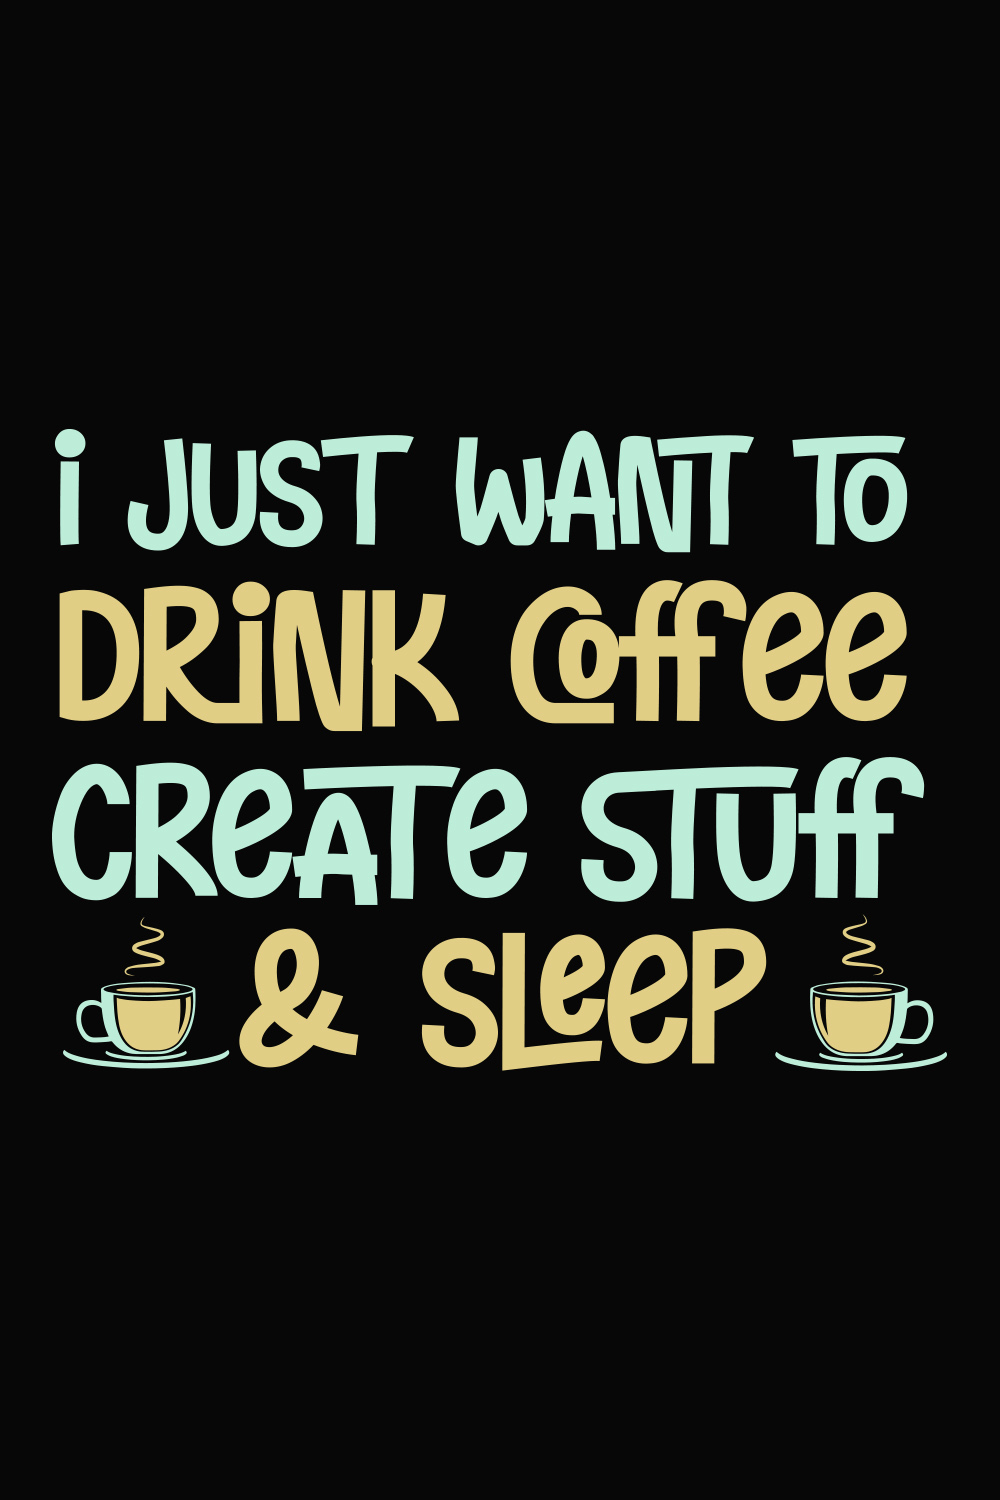 Coffee - I just want to drink coffee create stuff and sleep